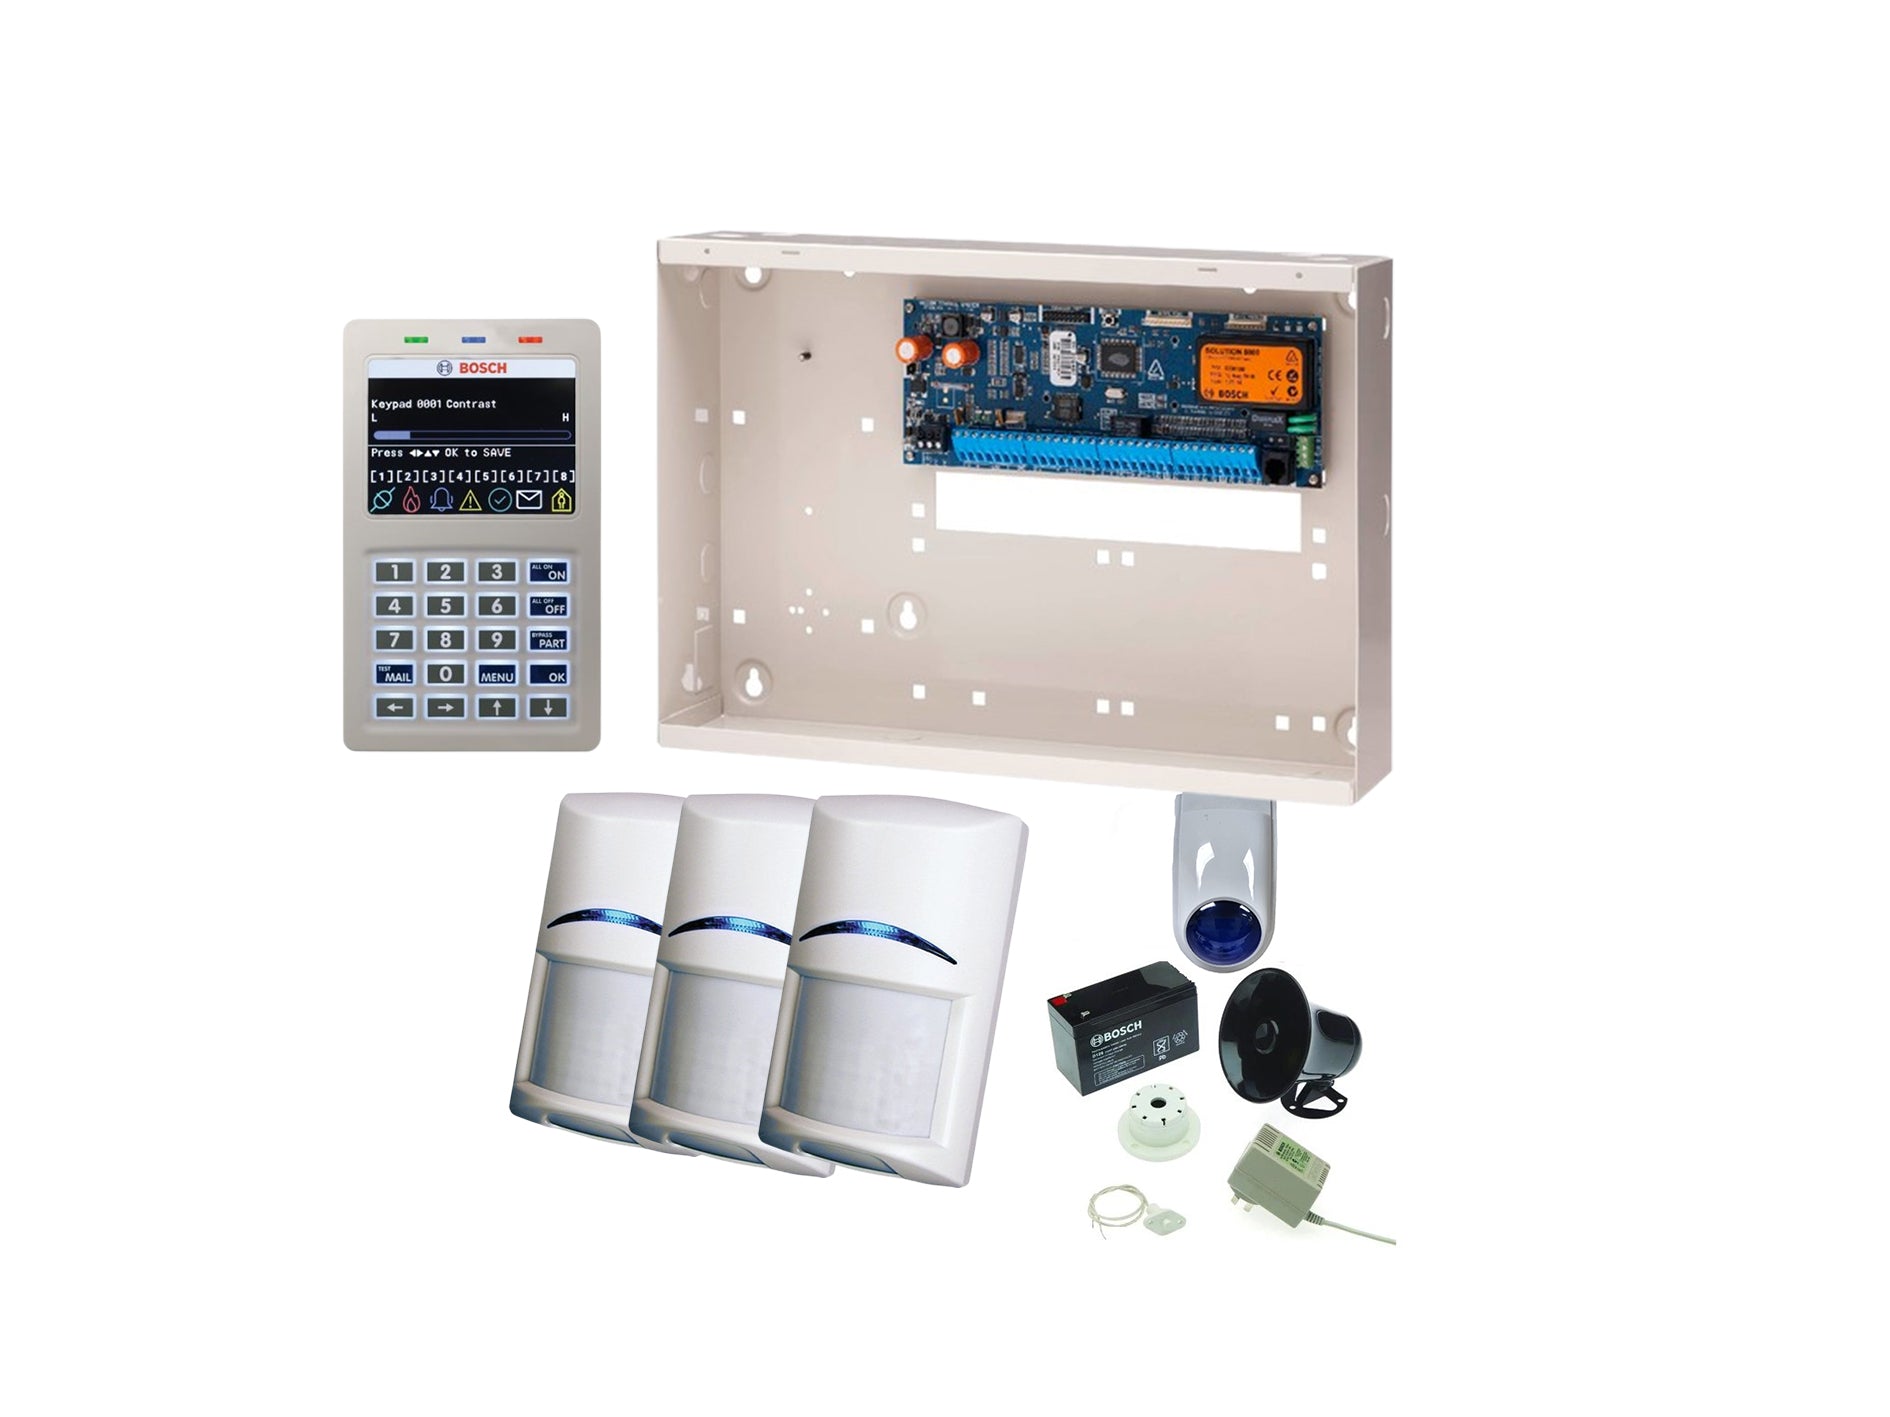 BOSCH, Solution 6000, Alarm kit, + CC610PB panel, CP736B Smart Prox LCD keypad, 3x Tritech detectors + Accessories included